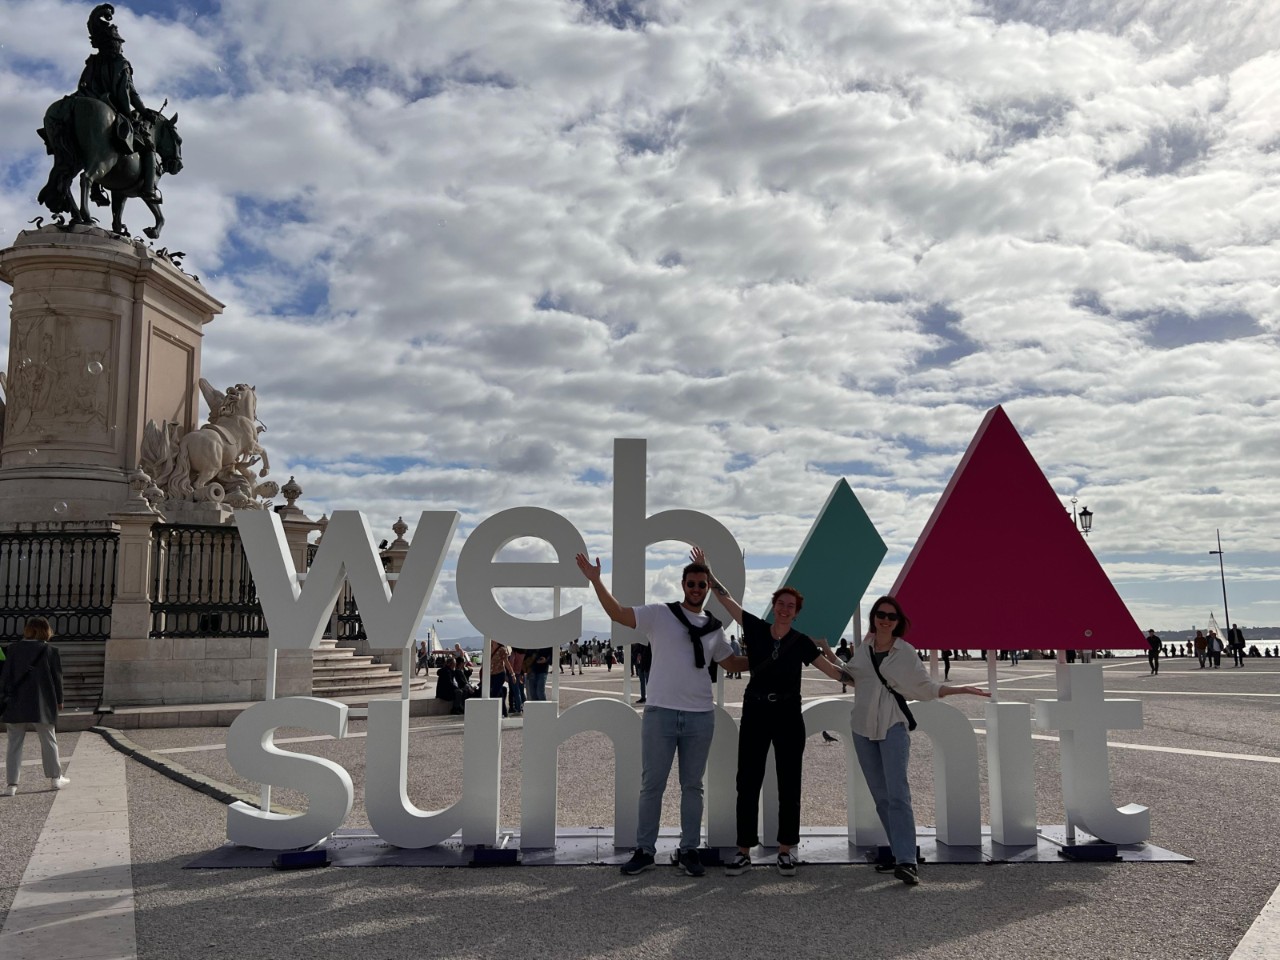 web summit outside